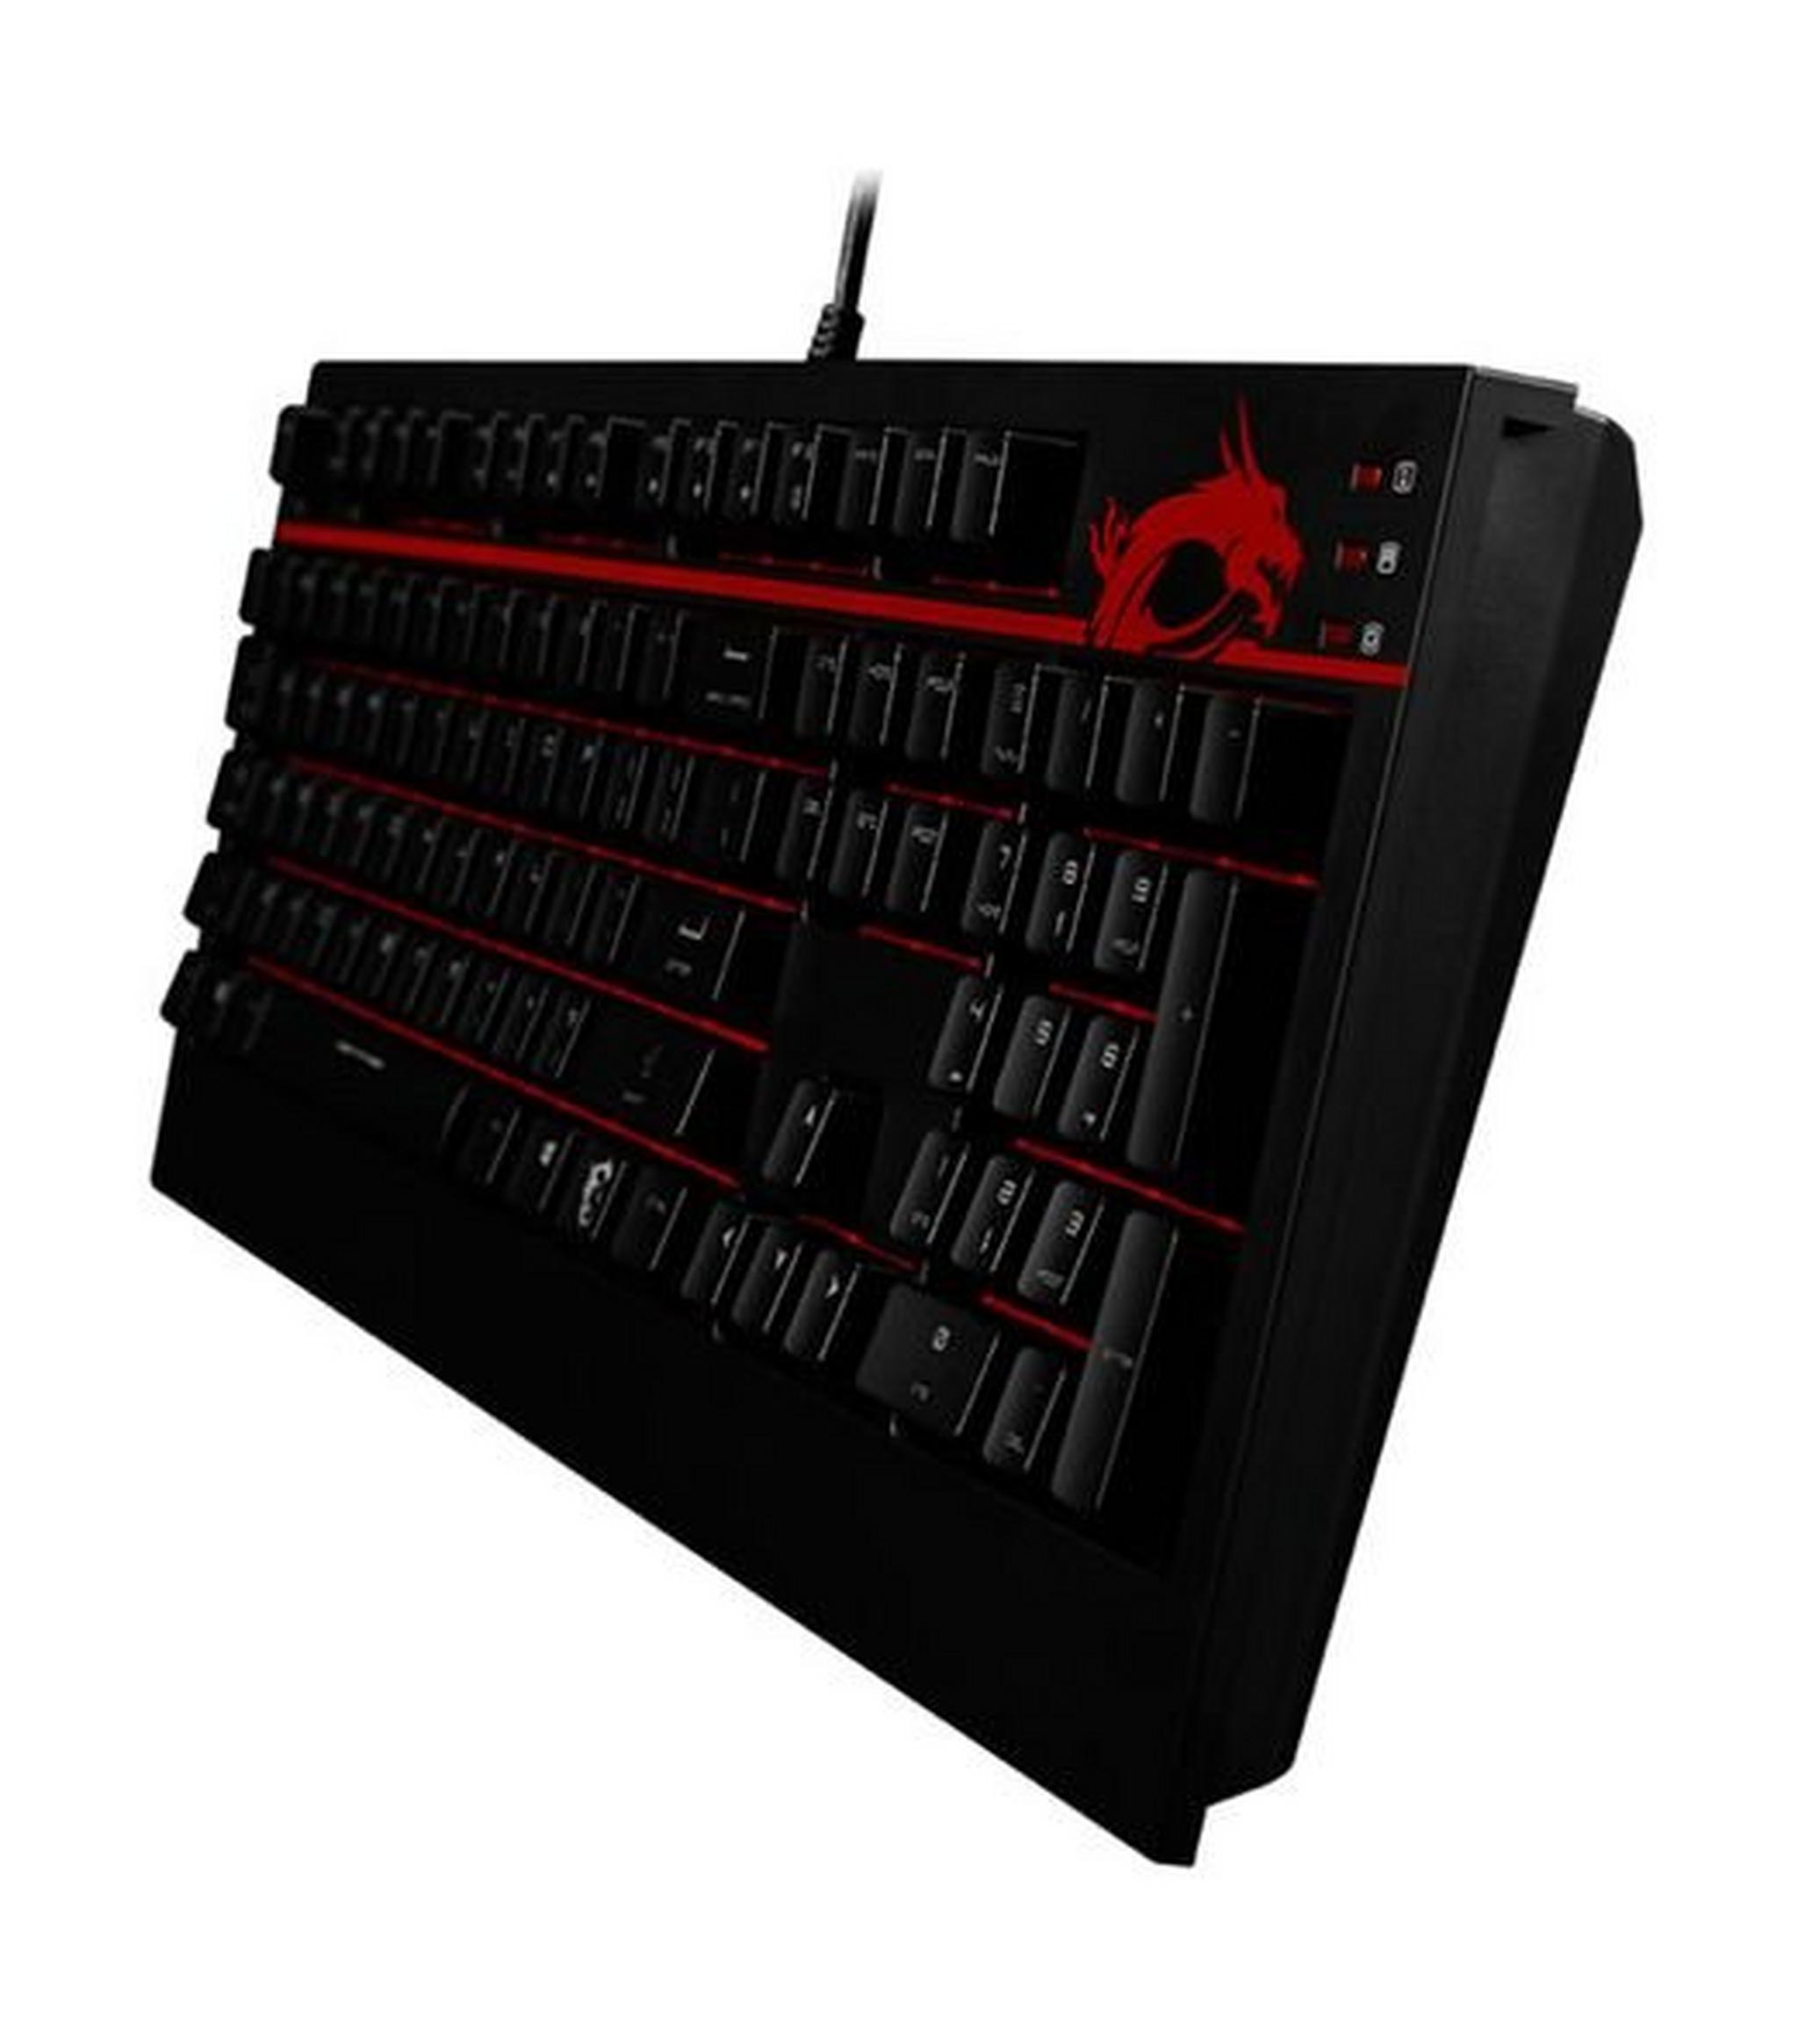 MSI Backlit Mechanical Gaming Keyboard (GK-701) – Black